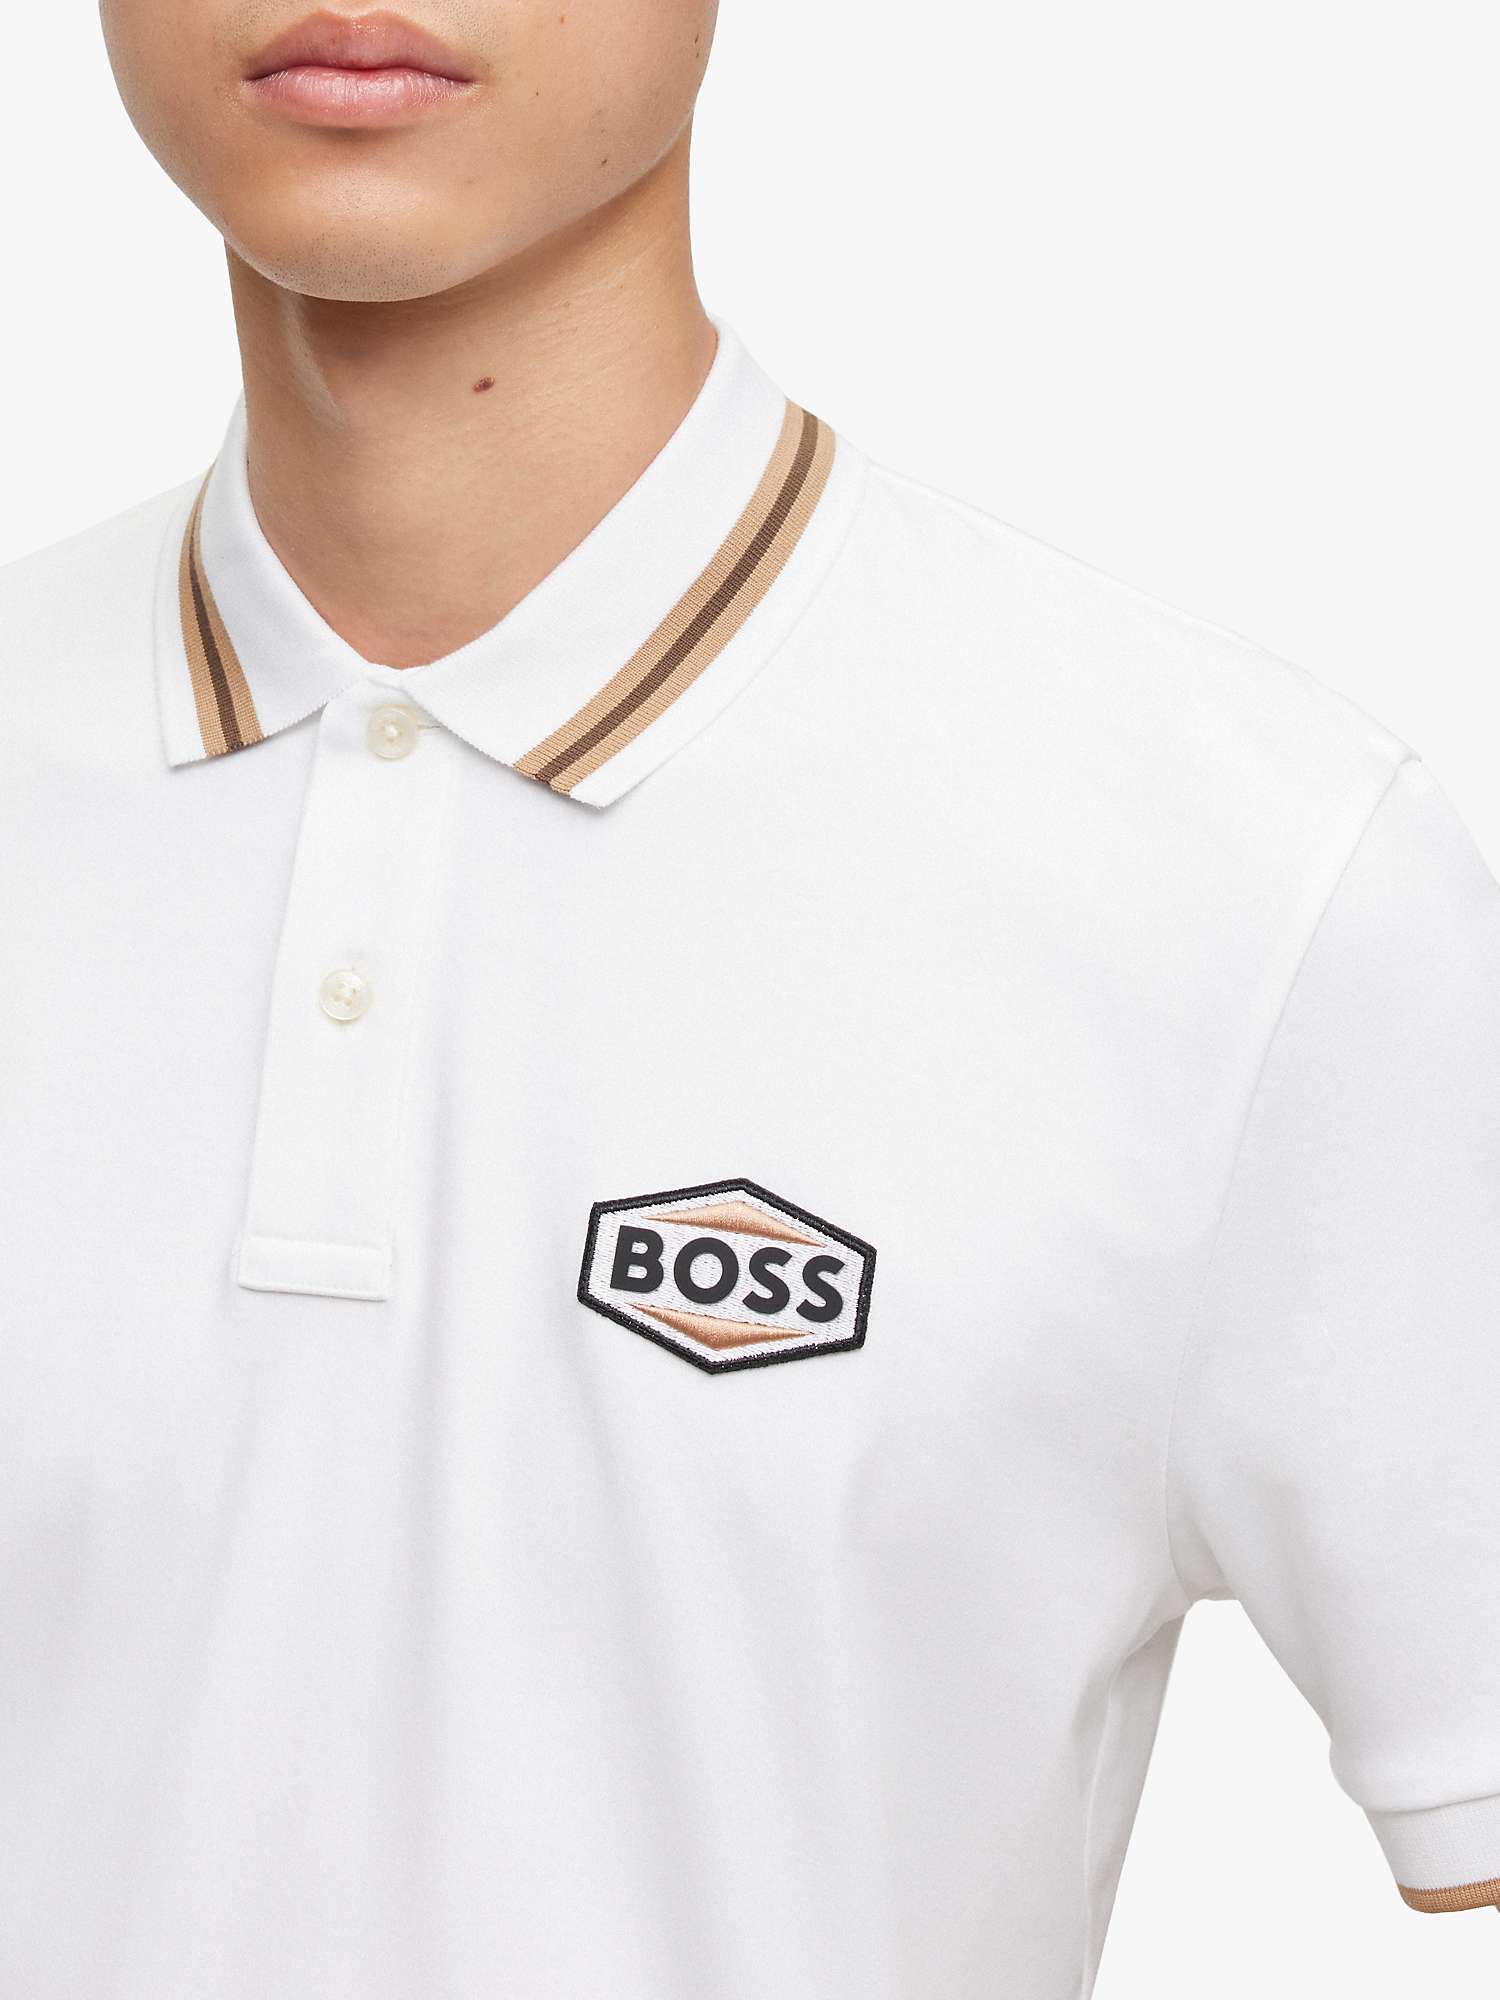 BOSS Parlay 194 Badge Polo Shirt, White at John Lewis & Partners